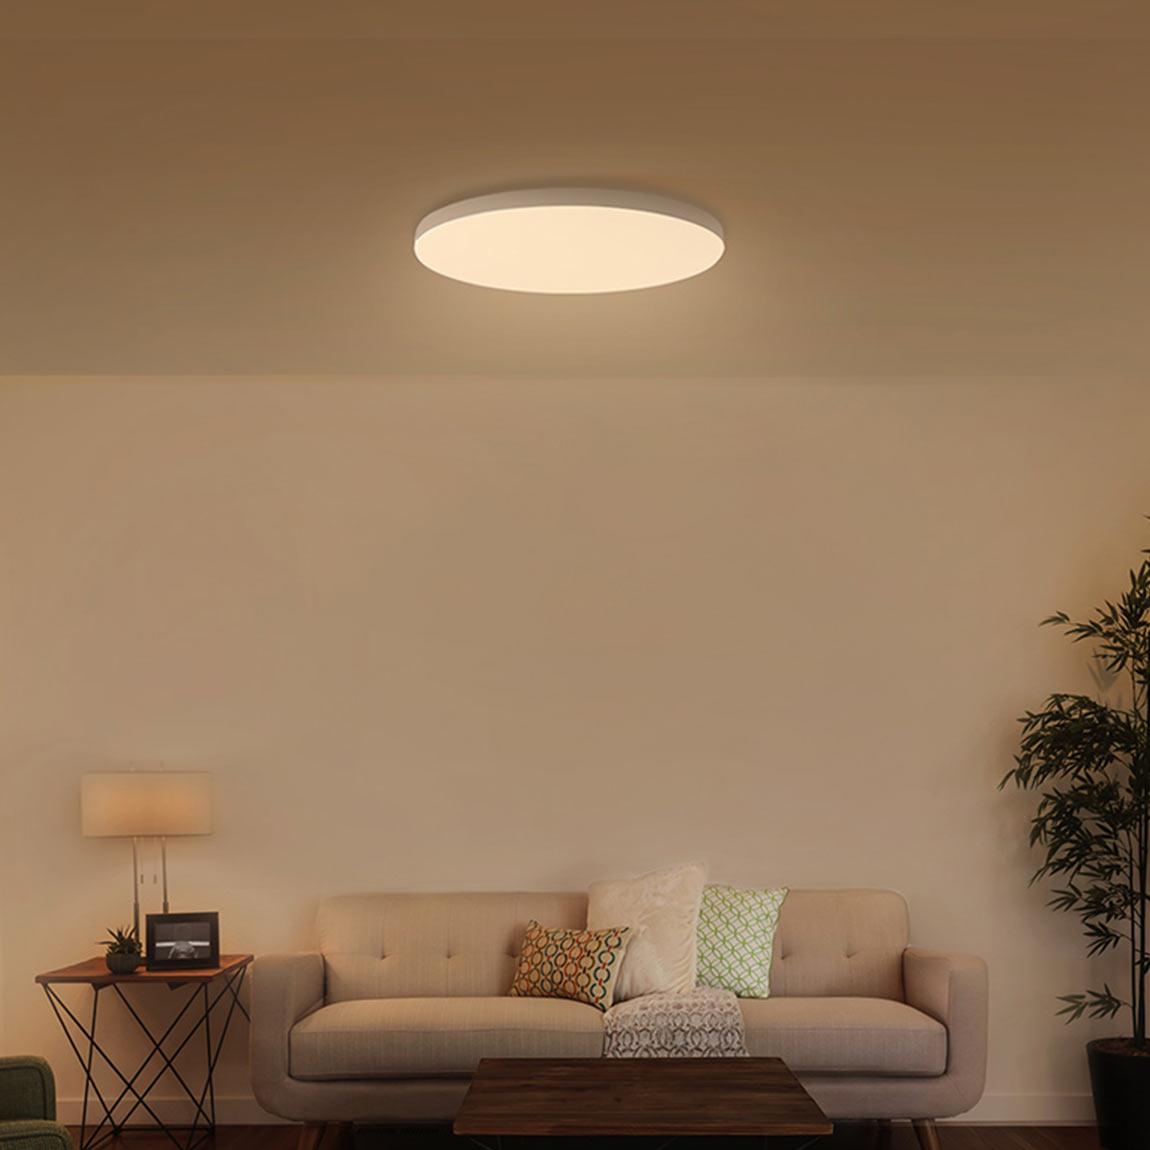 Xiaomi Mi Smart LED Ceiling Light (450mm) - über der Couch